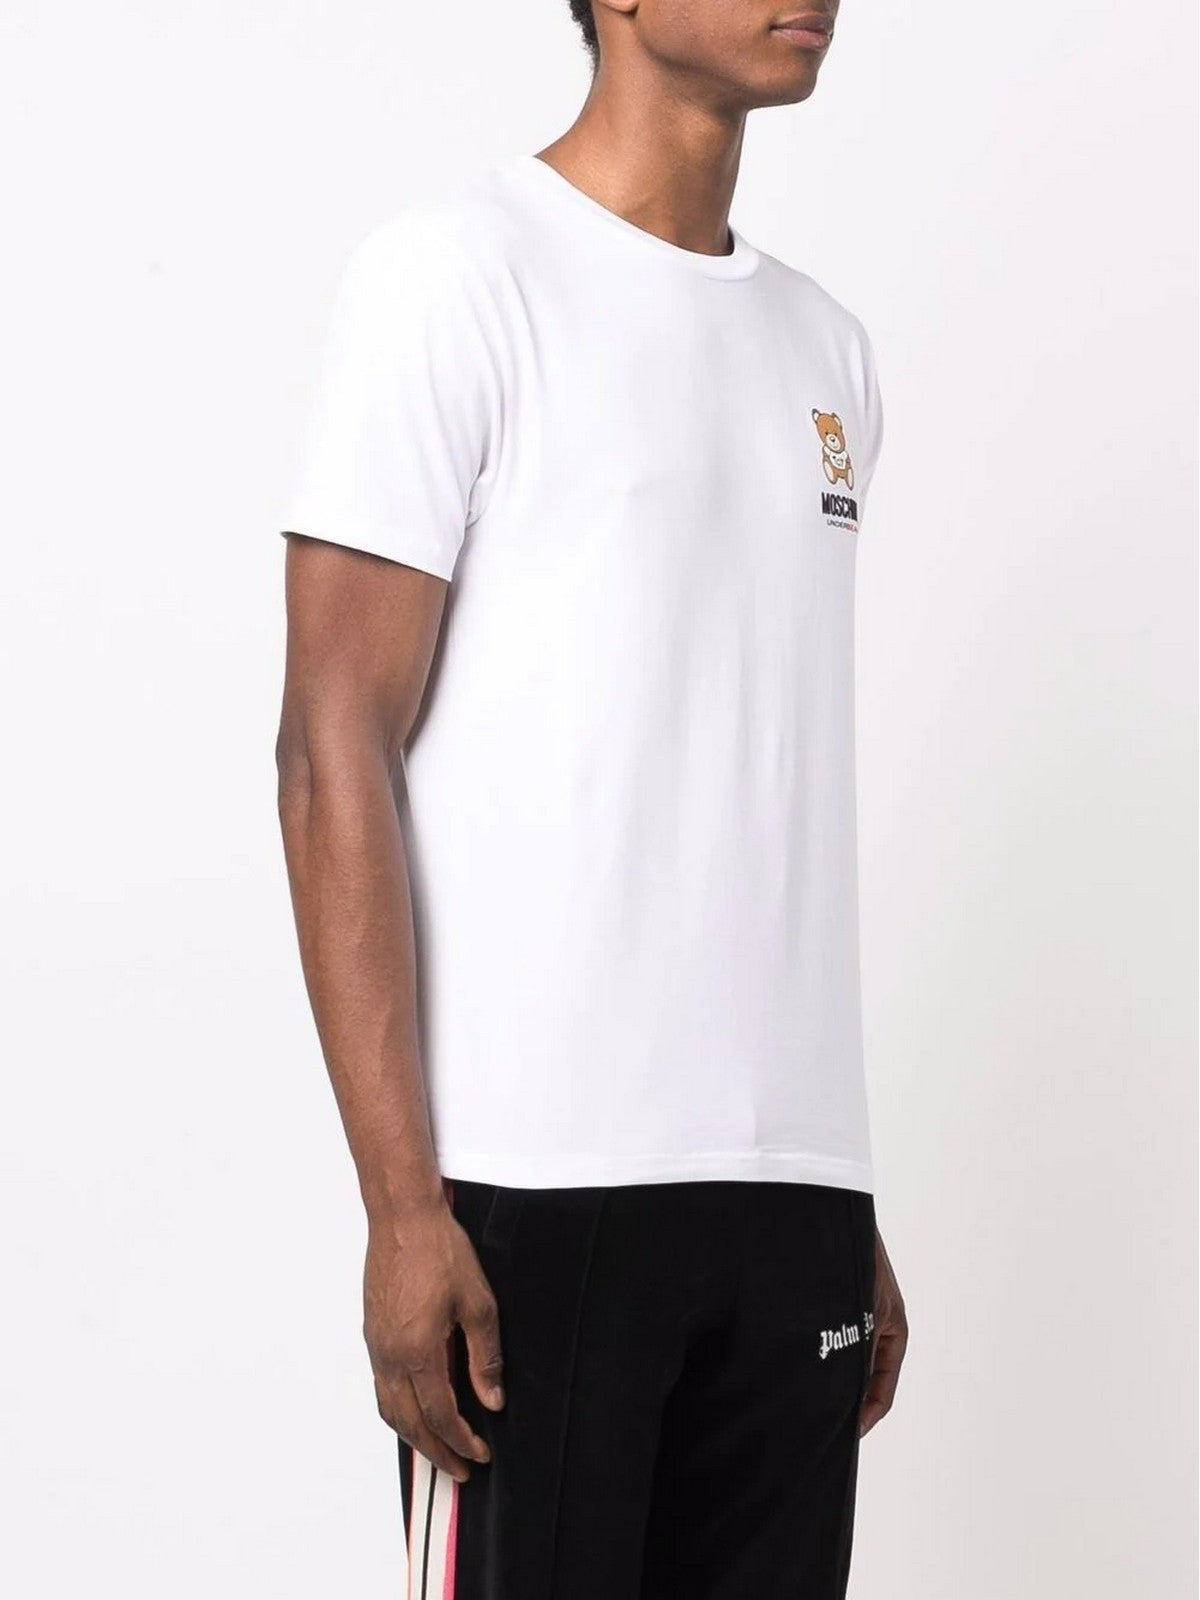 MOSCHINO UNDERWEAR T-Shirt e Polo Uomo  V1A0784 4410 0001 Bianco